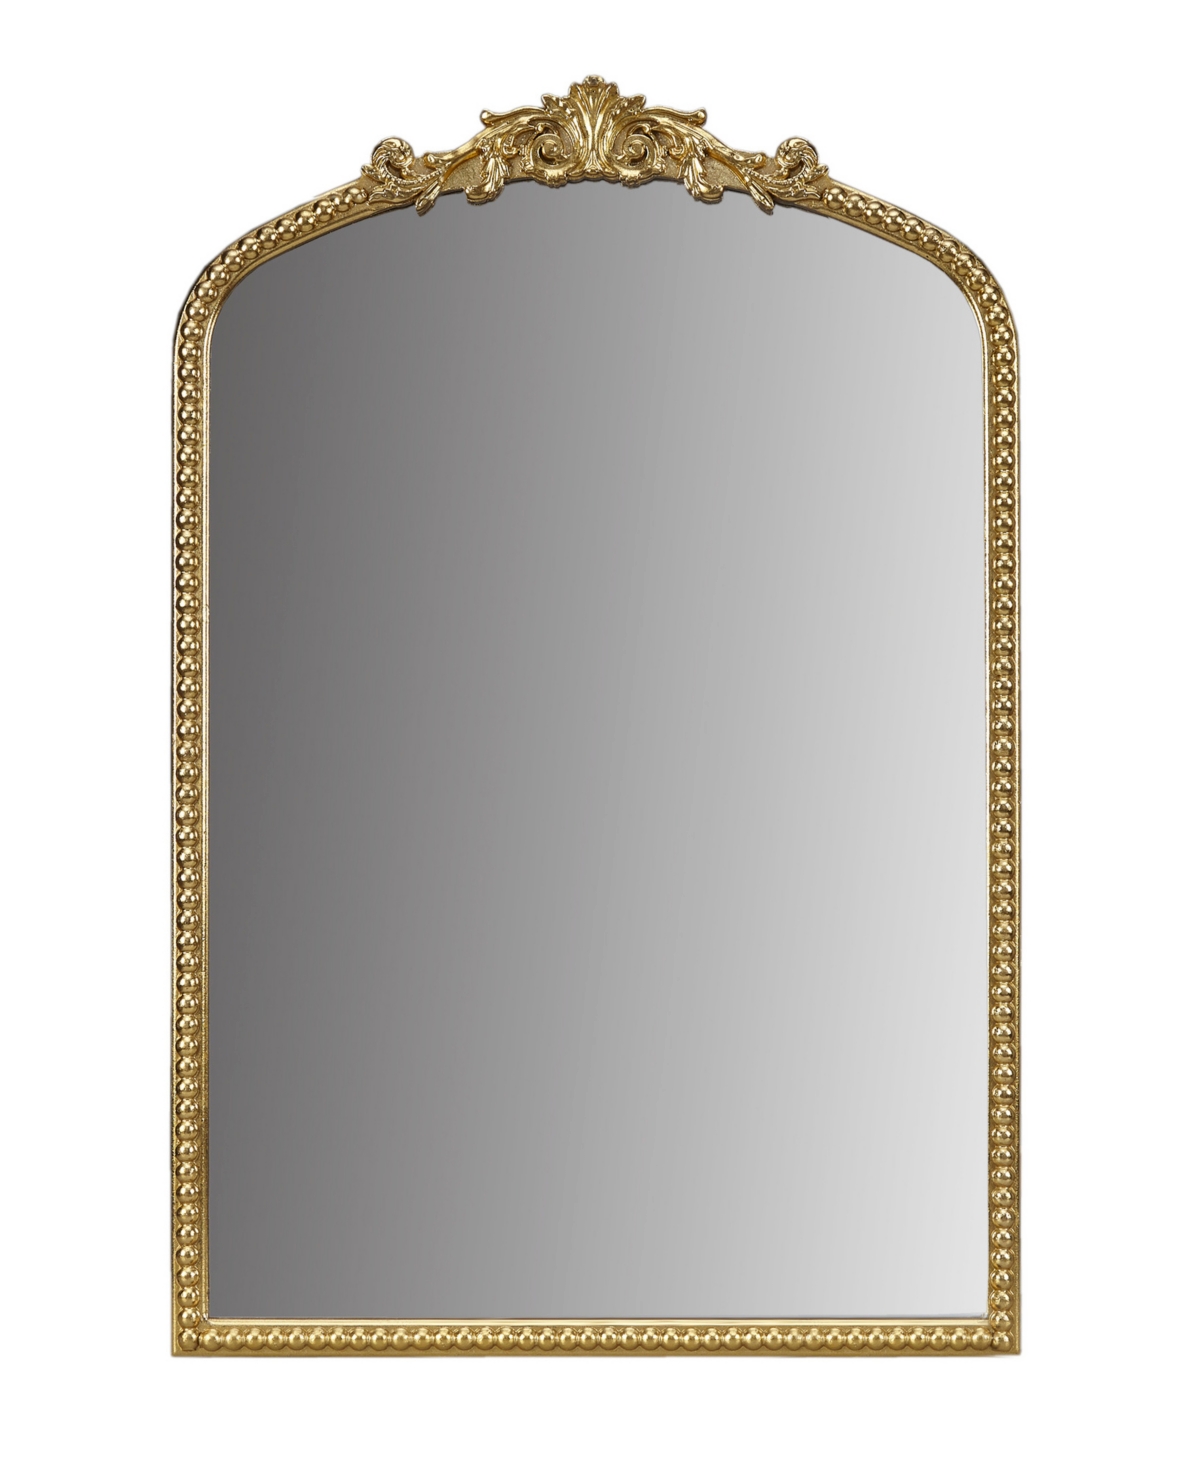 Lilbeth Beaded Arch Wall Decor Mirror - Gold